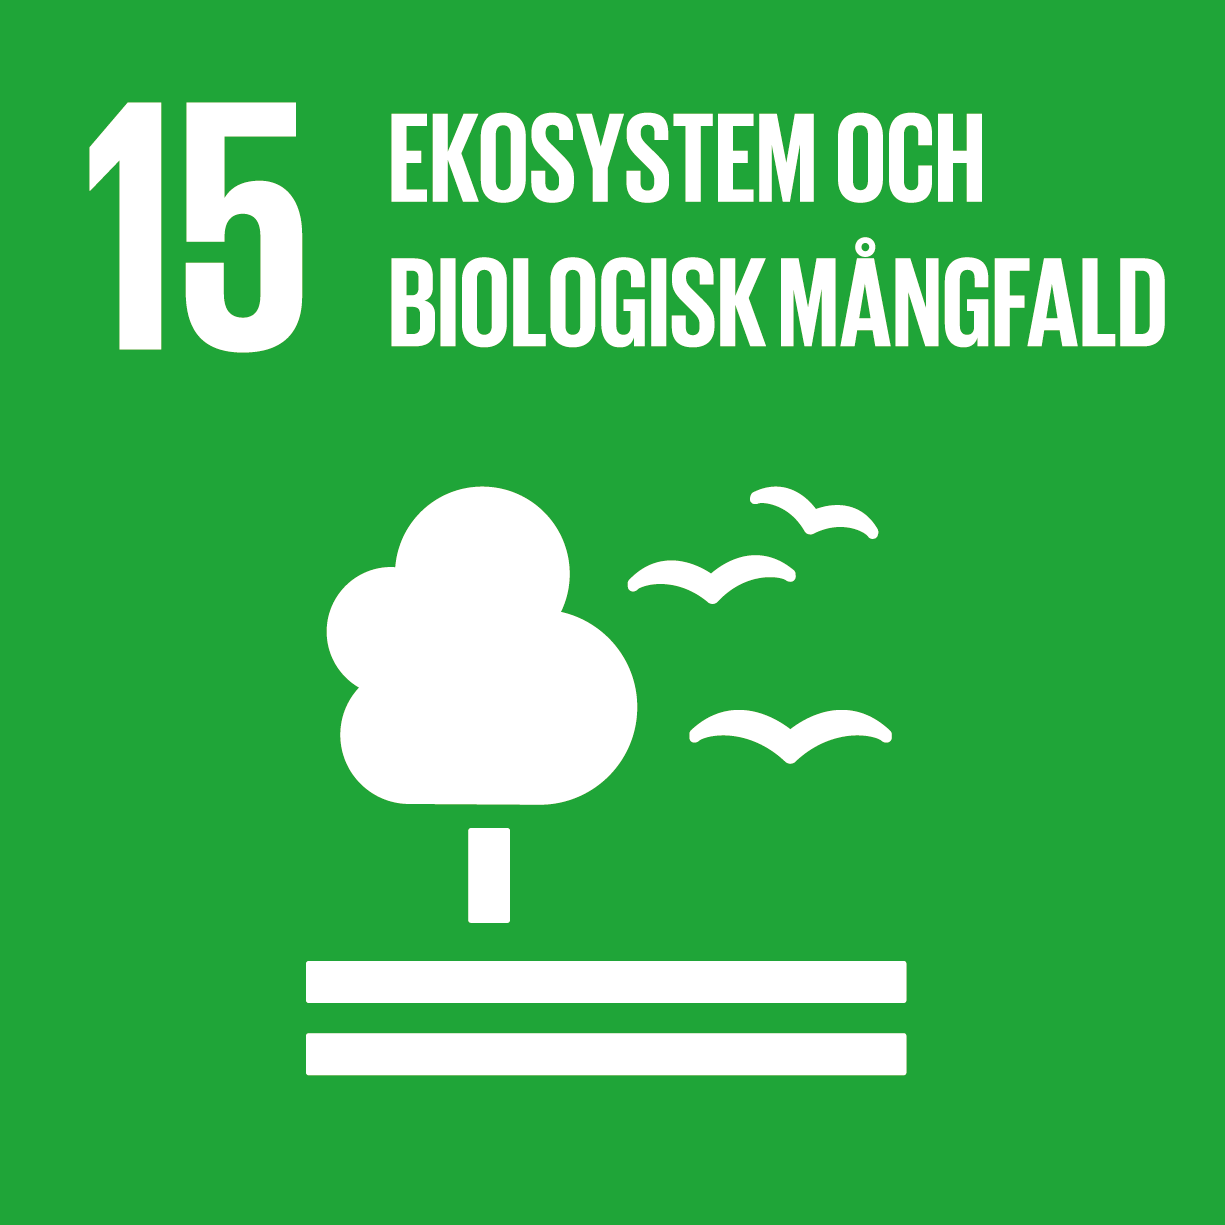 15 ekosystem